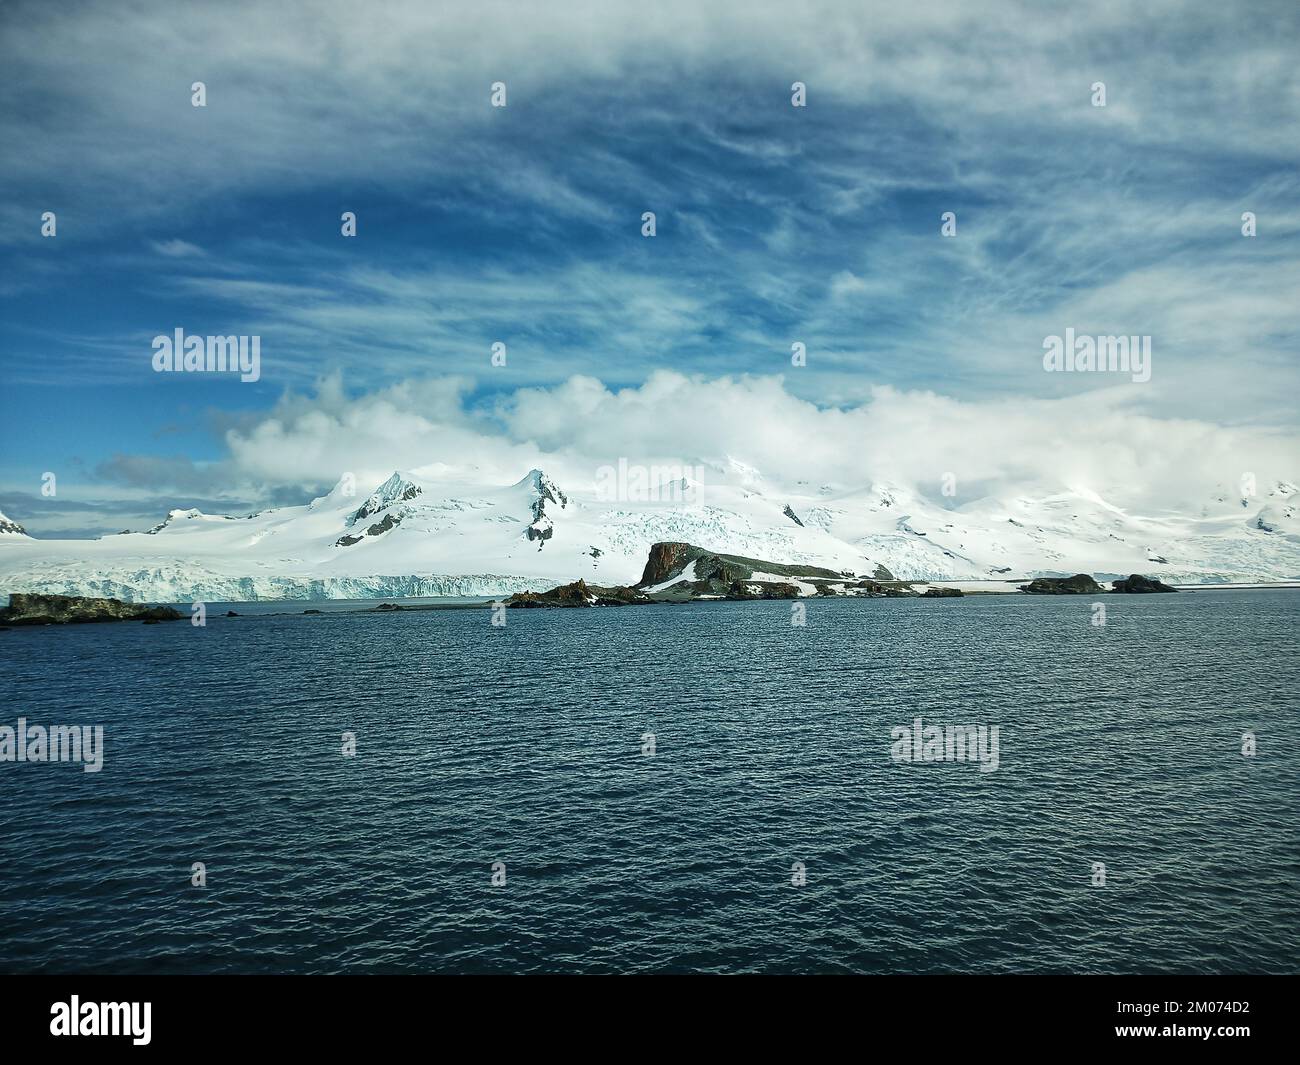 Half moon island,antarctica,antartica,antarctic peninsula,ice filled mountains in antarctica,antarctica landscape,climate change in antarctica,ice Stock Photo